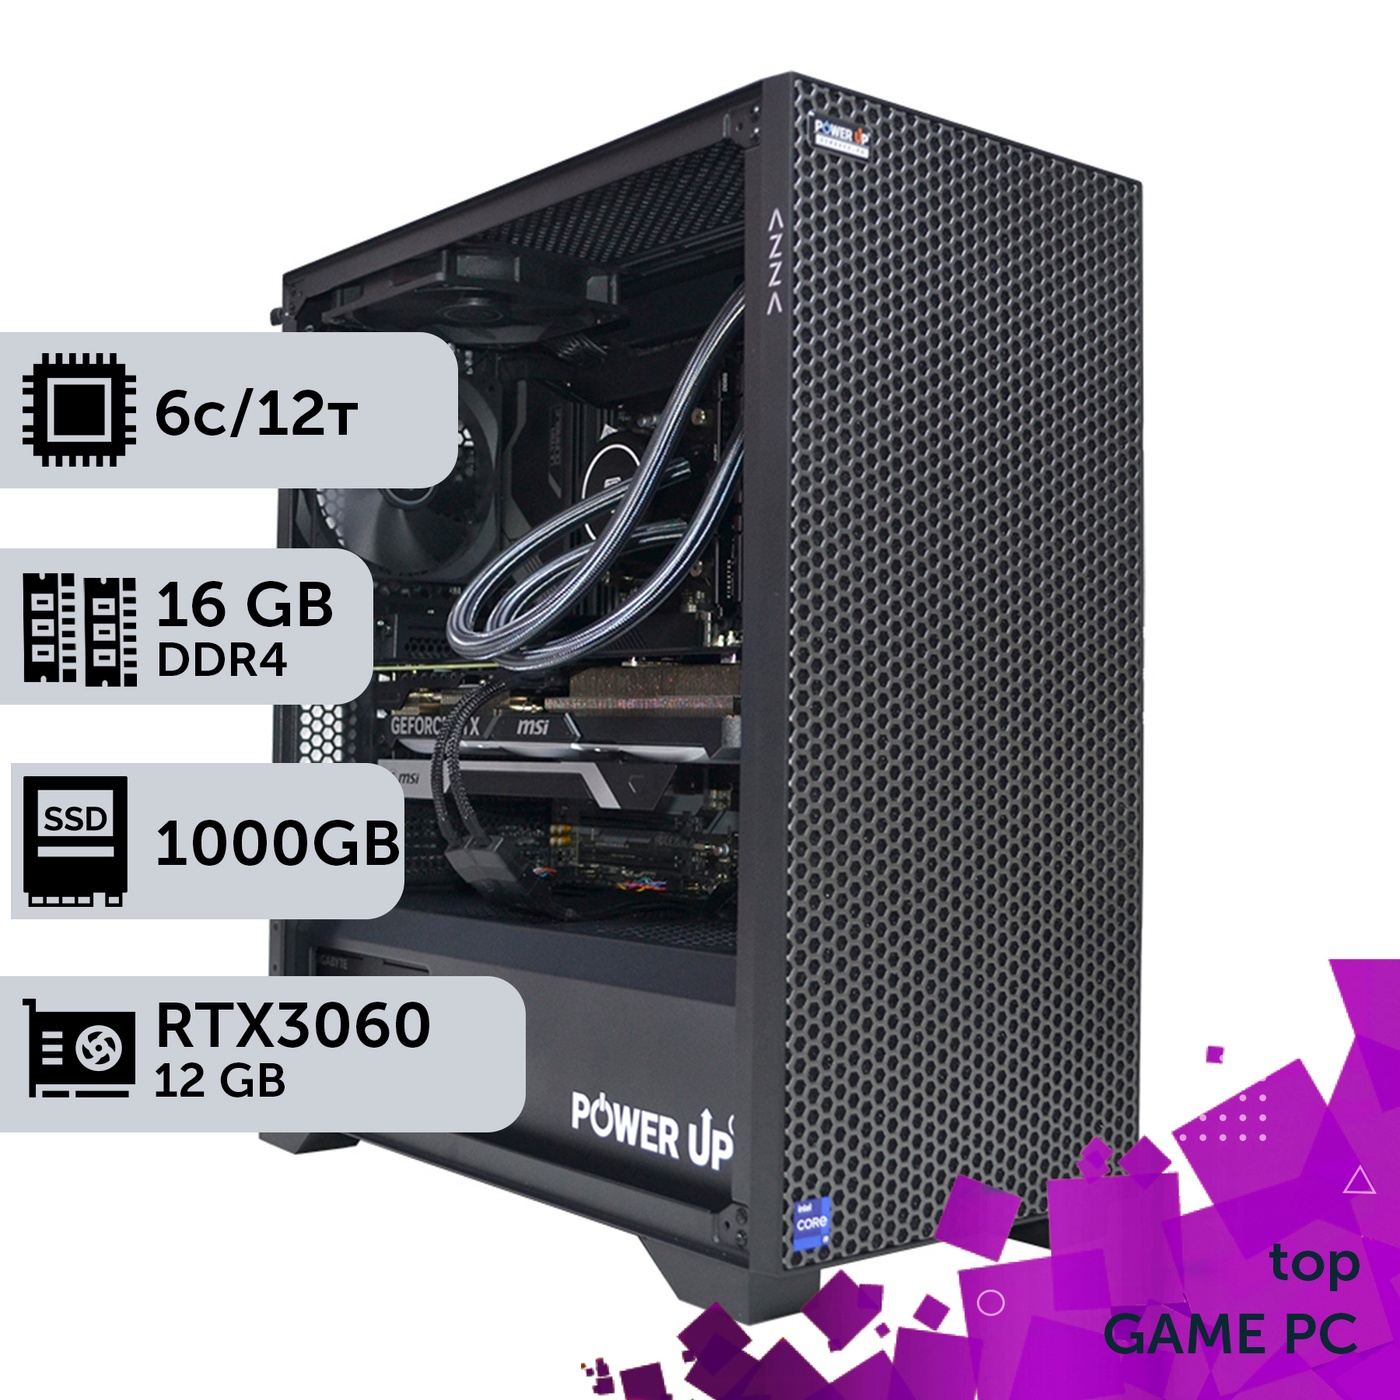 Ігровий комп'ютер GamePC TOP #206 Core i5 12400F/16 GB/HDD 1 TB/SSD 1TB/GeForce RTX 3060 12GB